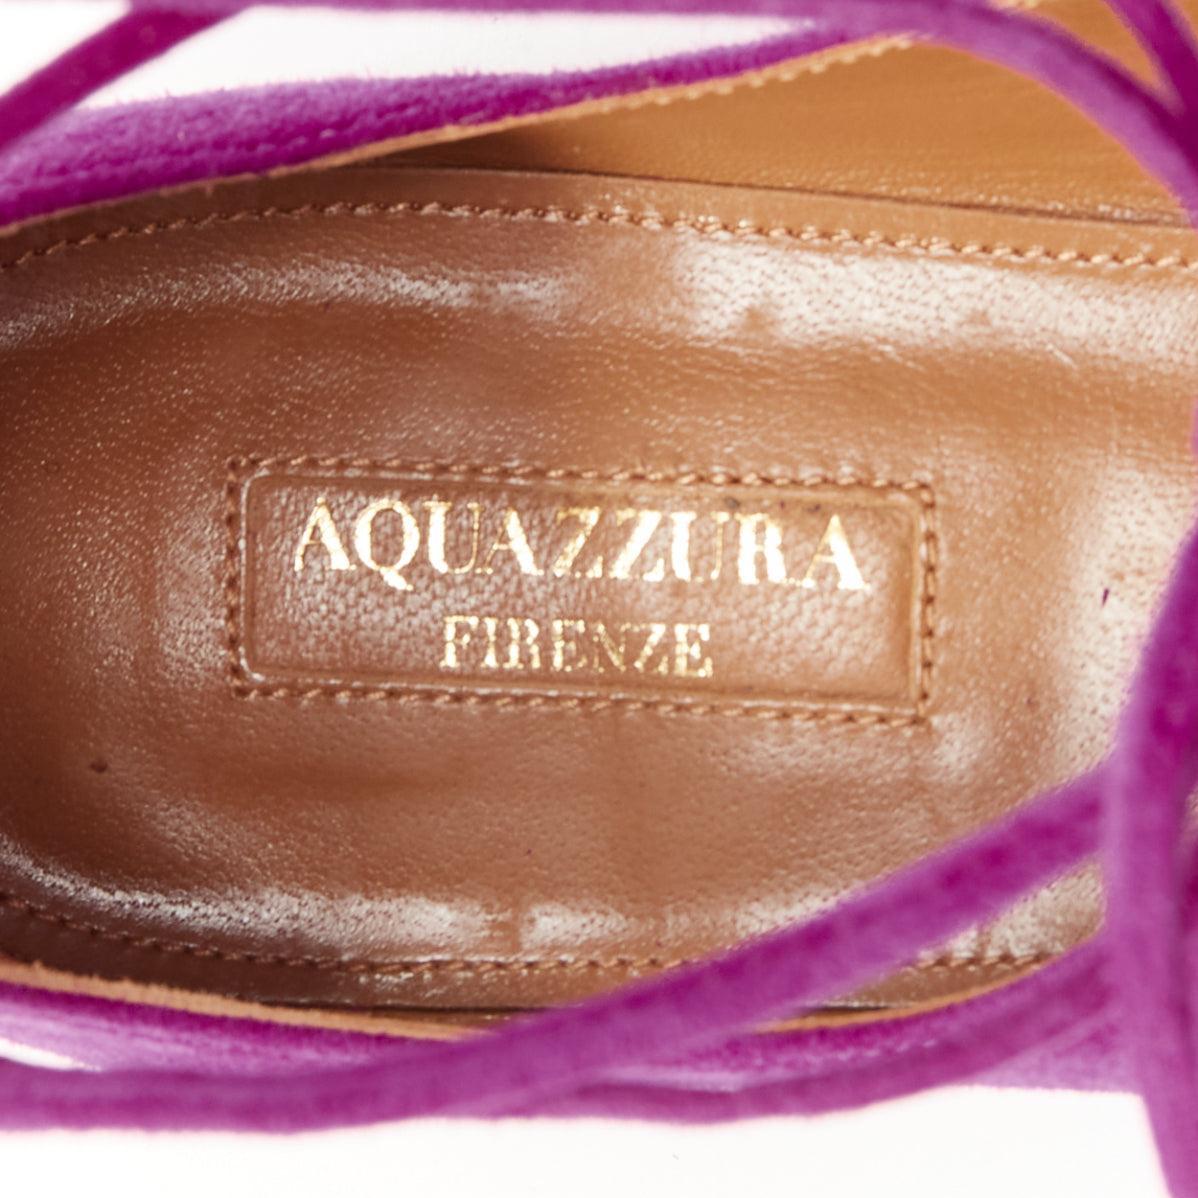 AQUAZZURA Belgravia purple suede leather pointy lace up gold heel flats EU37.5 For Sale 5